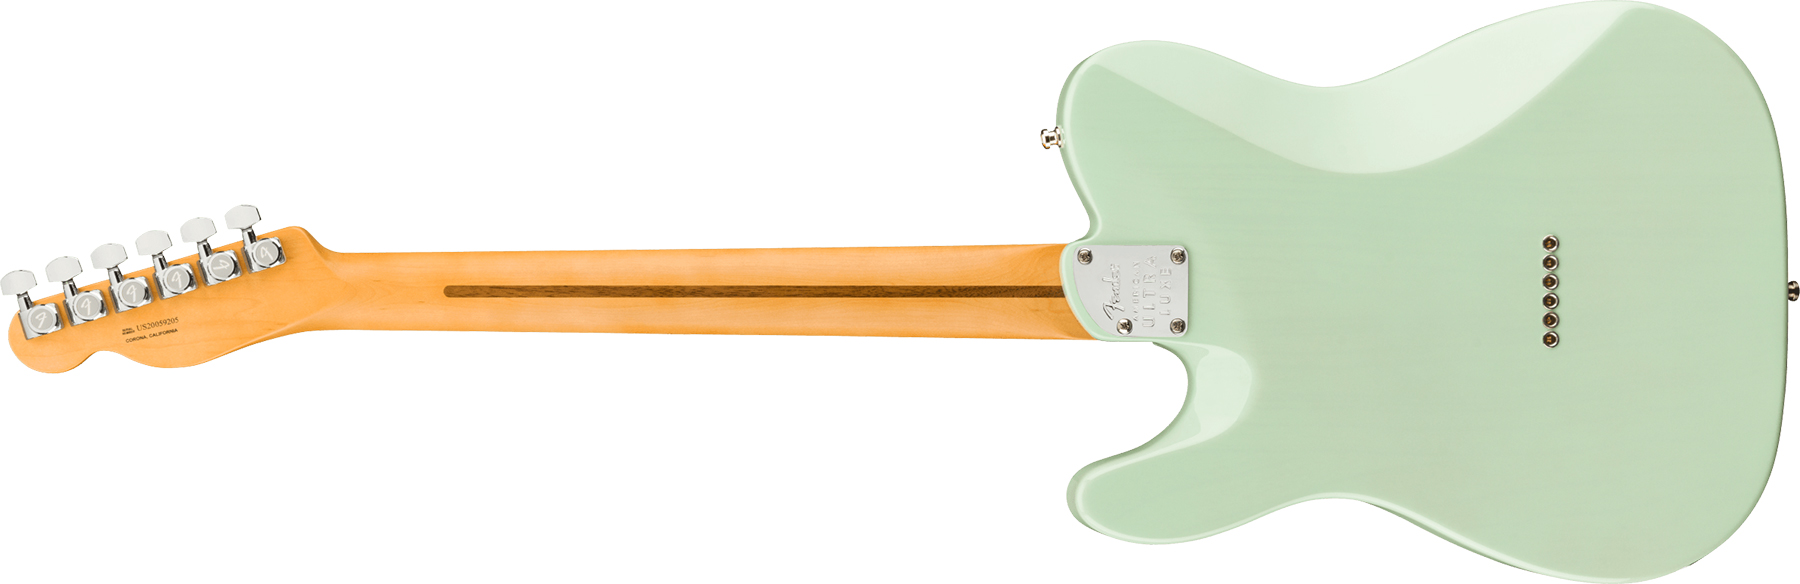 Fender Tele American Ultra Luxe Usa Rw +etui - Transparent Surf Green - Tel shape electric guitar - Variation 1